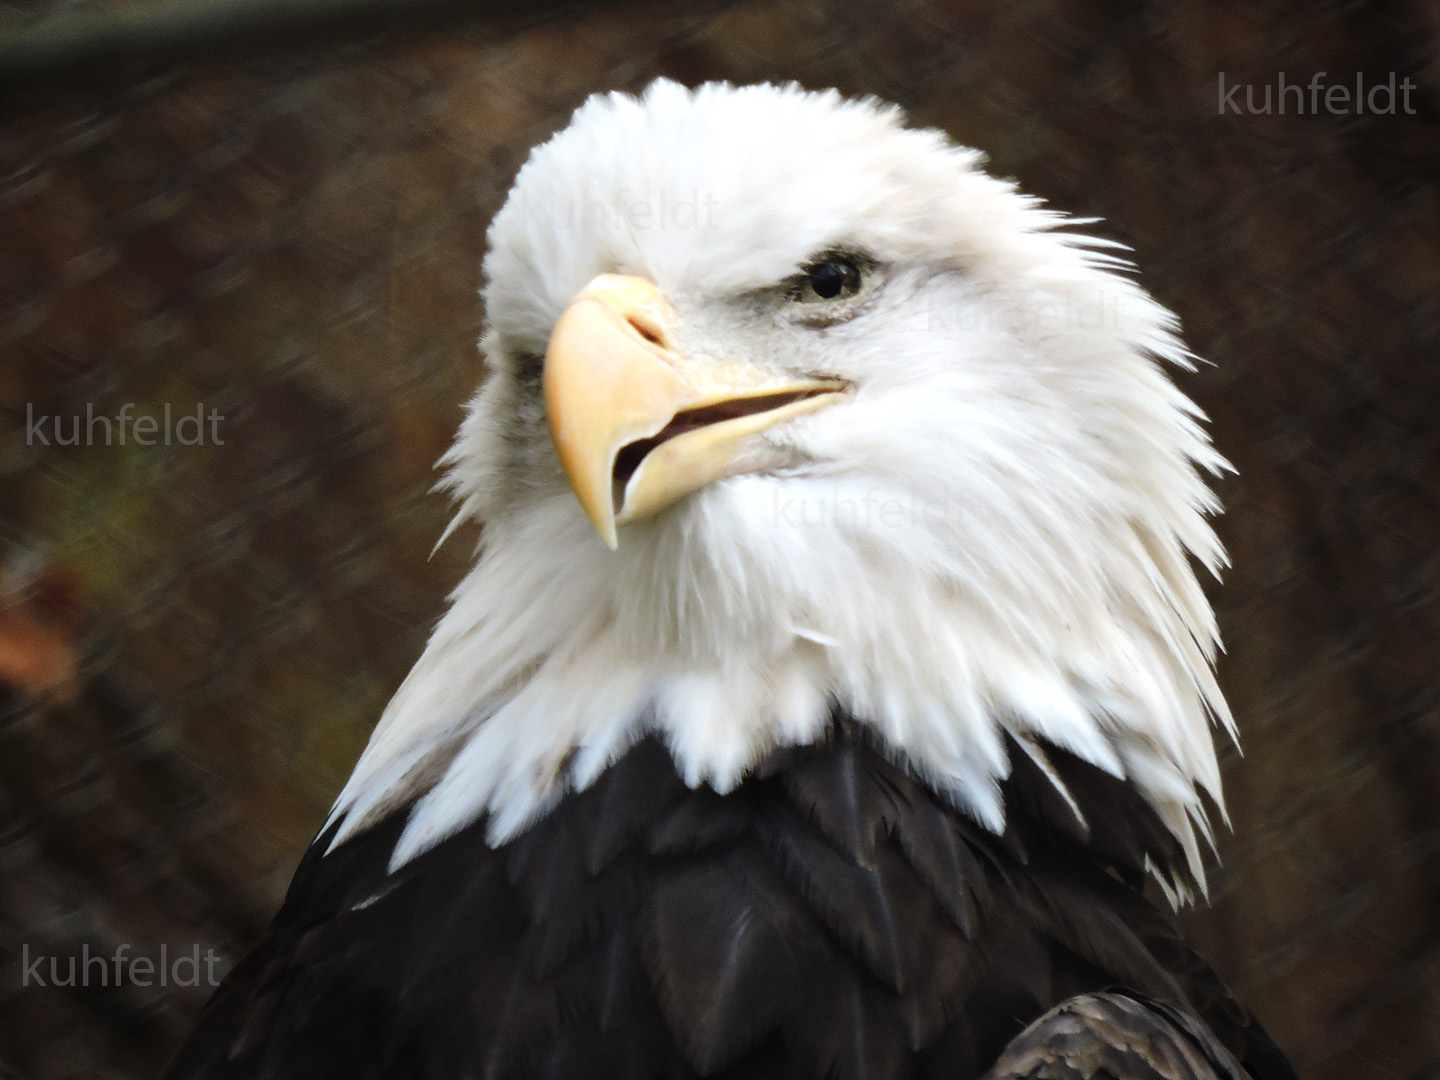 Blad Eagle; John Ball Zoo, Grand Rapids MI. Photo by Hank Kuhfeldt (c) 2016